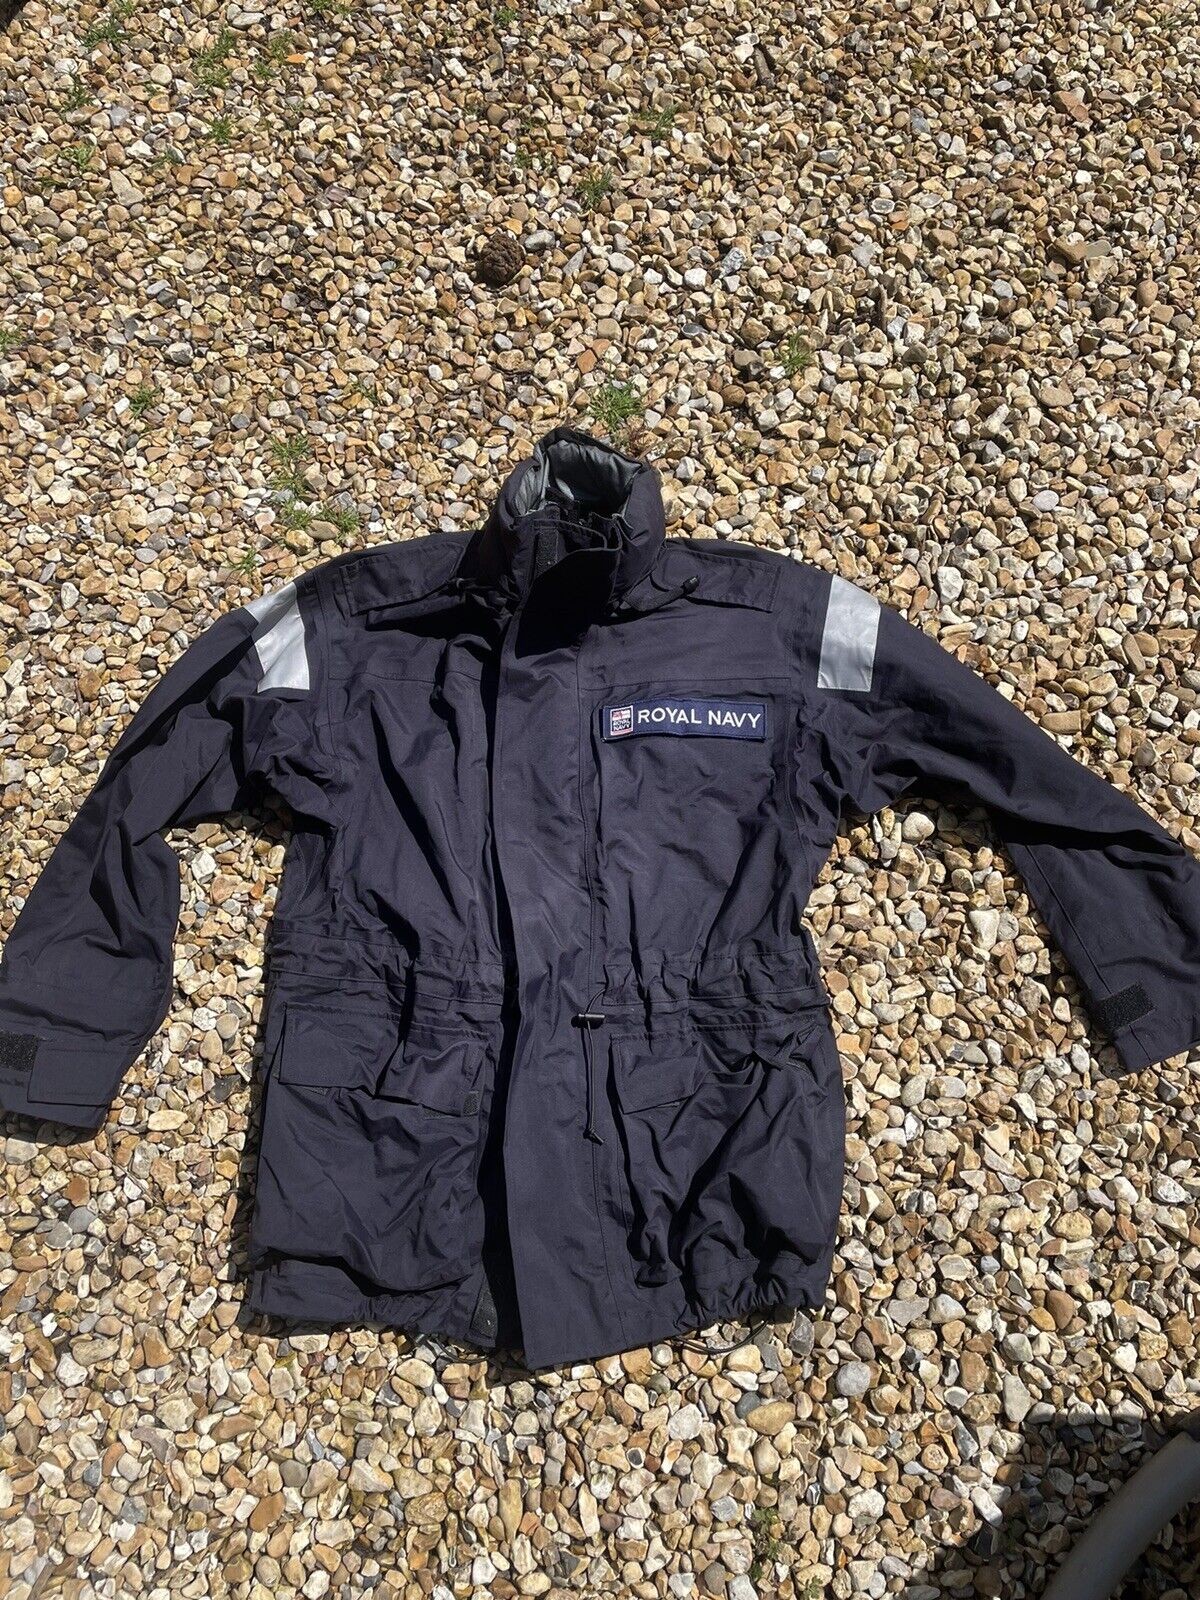 British Royal Navy RN MVP Jacket Waterproof Foul Weather Coat 170/96